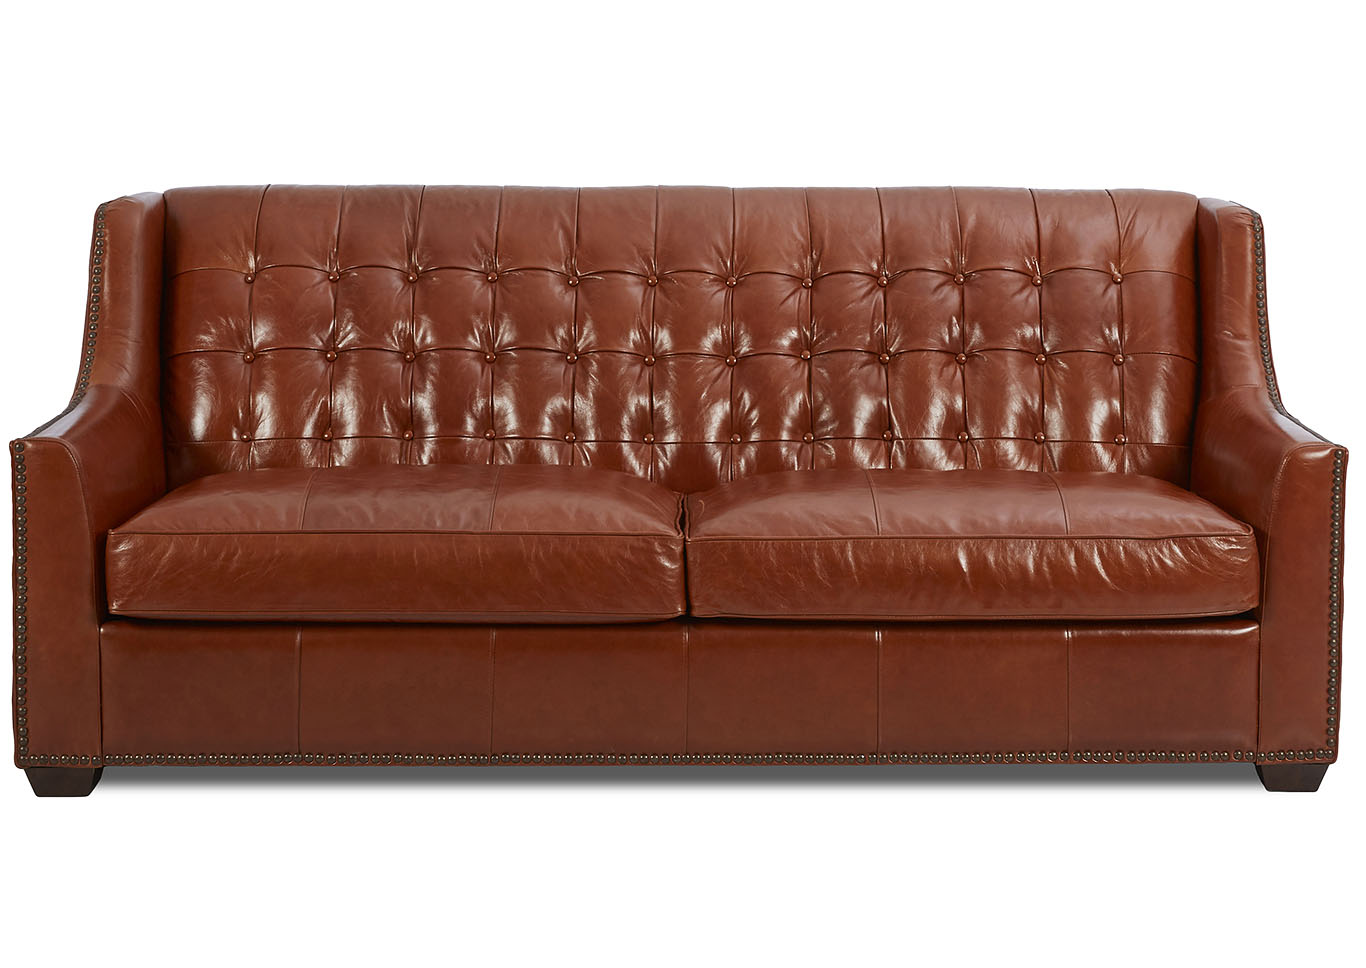 Pennington Brown Leather Stationary Sofa,Klaussner Home Furnishings